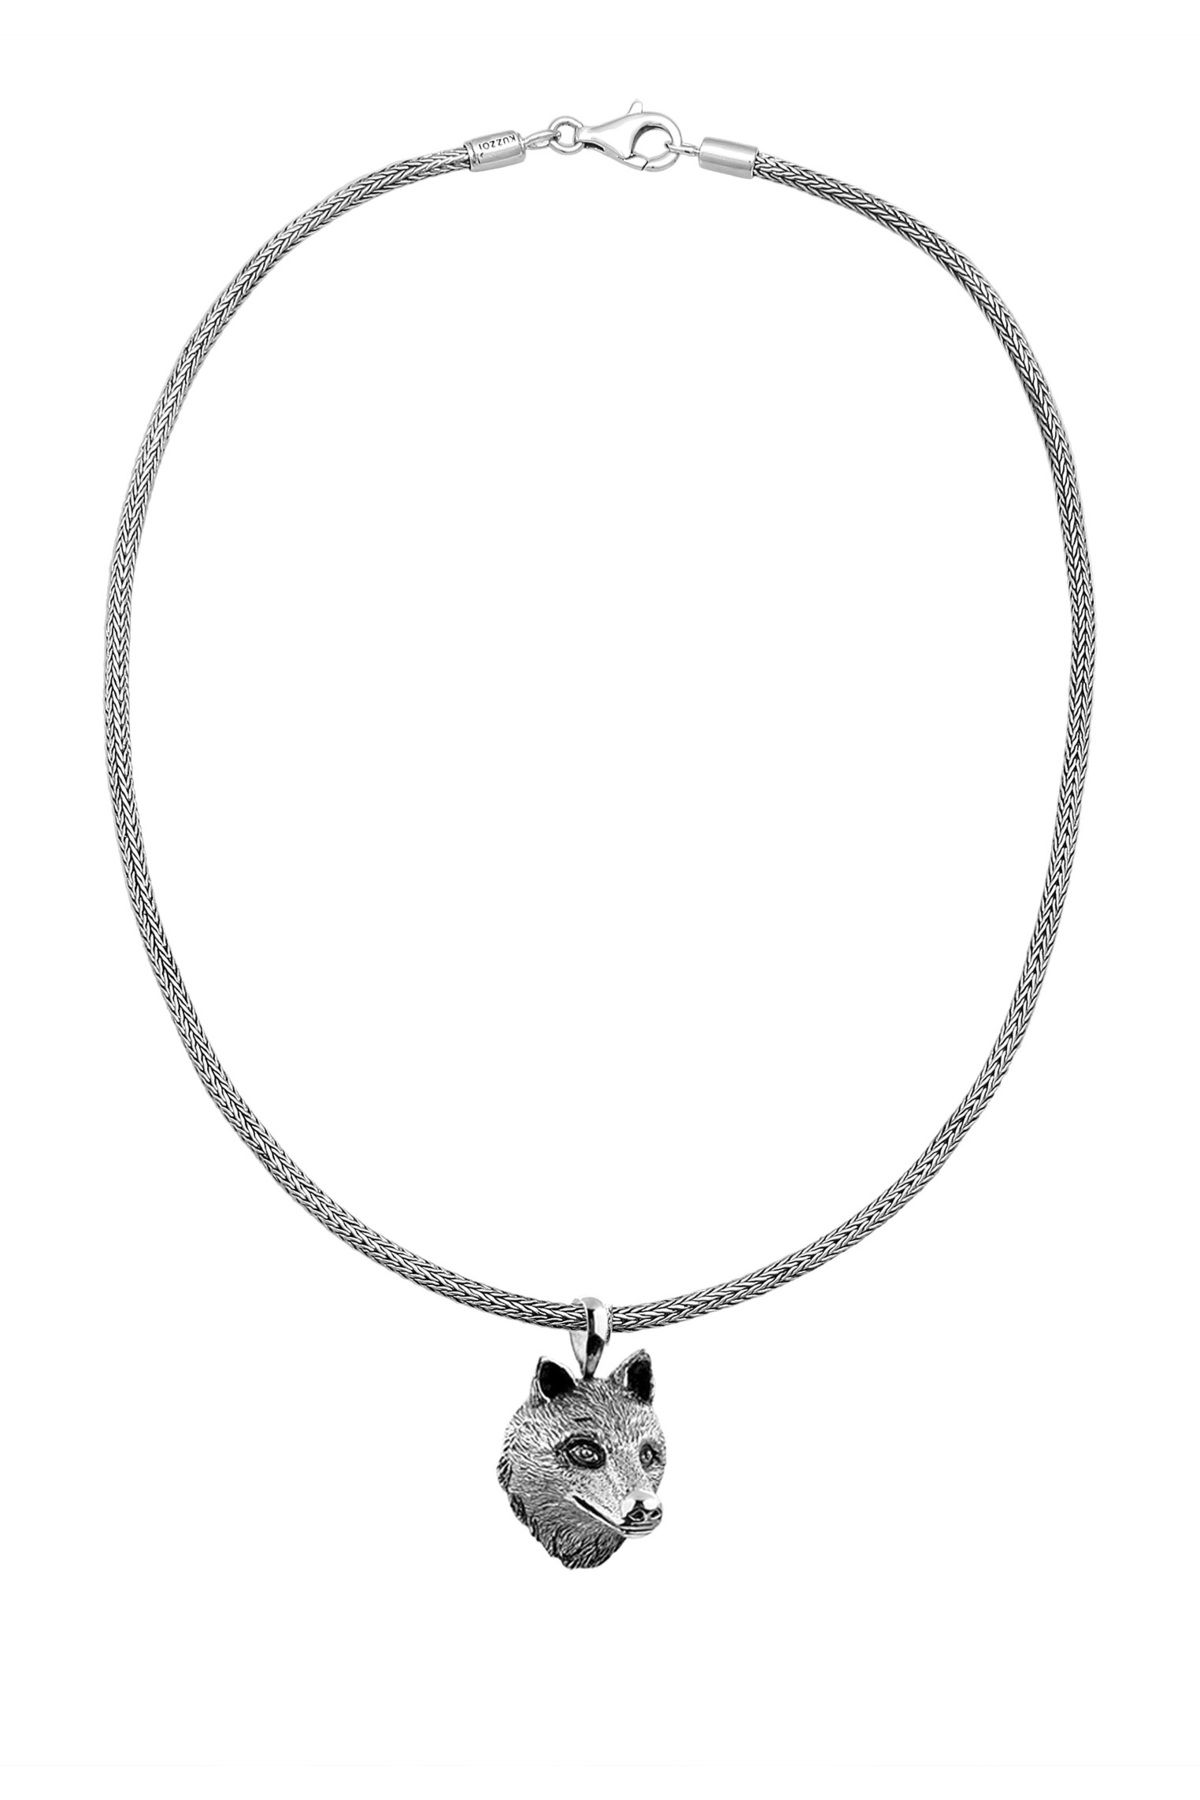 Halskette Anhänger Massiv Silber Wolfskopf 925 - KUZZOI Männerkette Trendyol